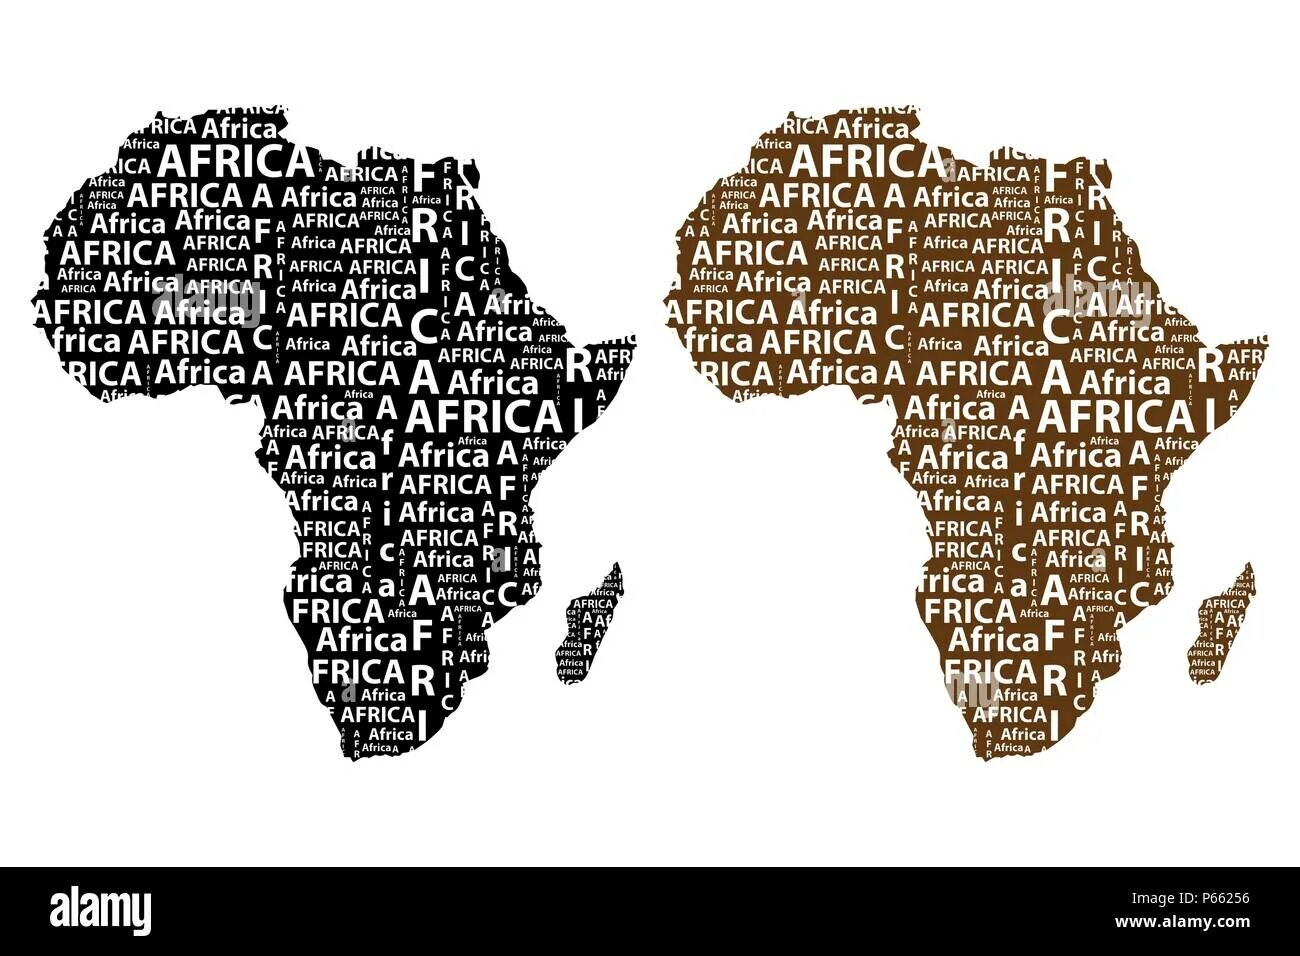 Африканские слова. Африка текст. Африканский язык слова. Популярные африканские слова. Africa text